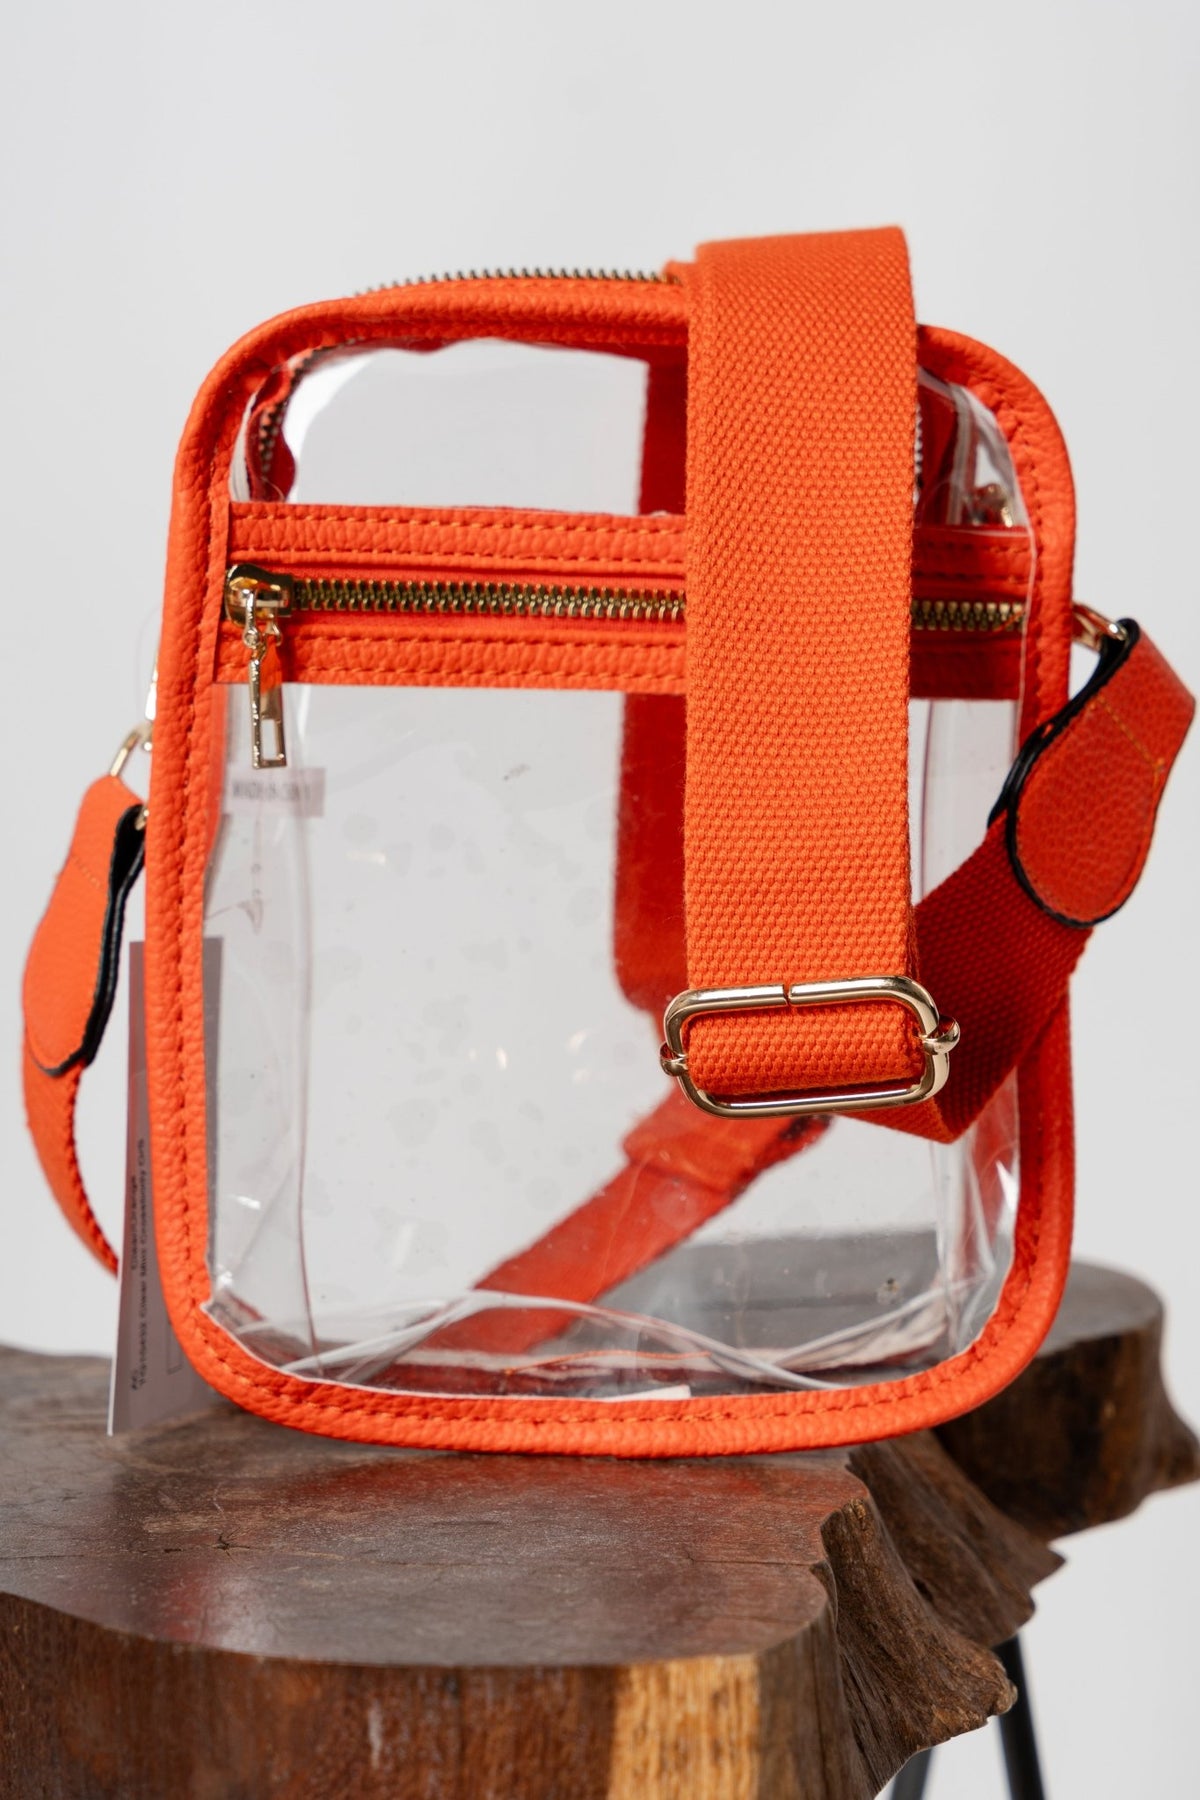 Clear crossbody stadium purse orange - Trendy Bags at Lush Fashion Lounge Boutique in Oklahoma City